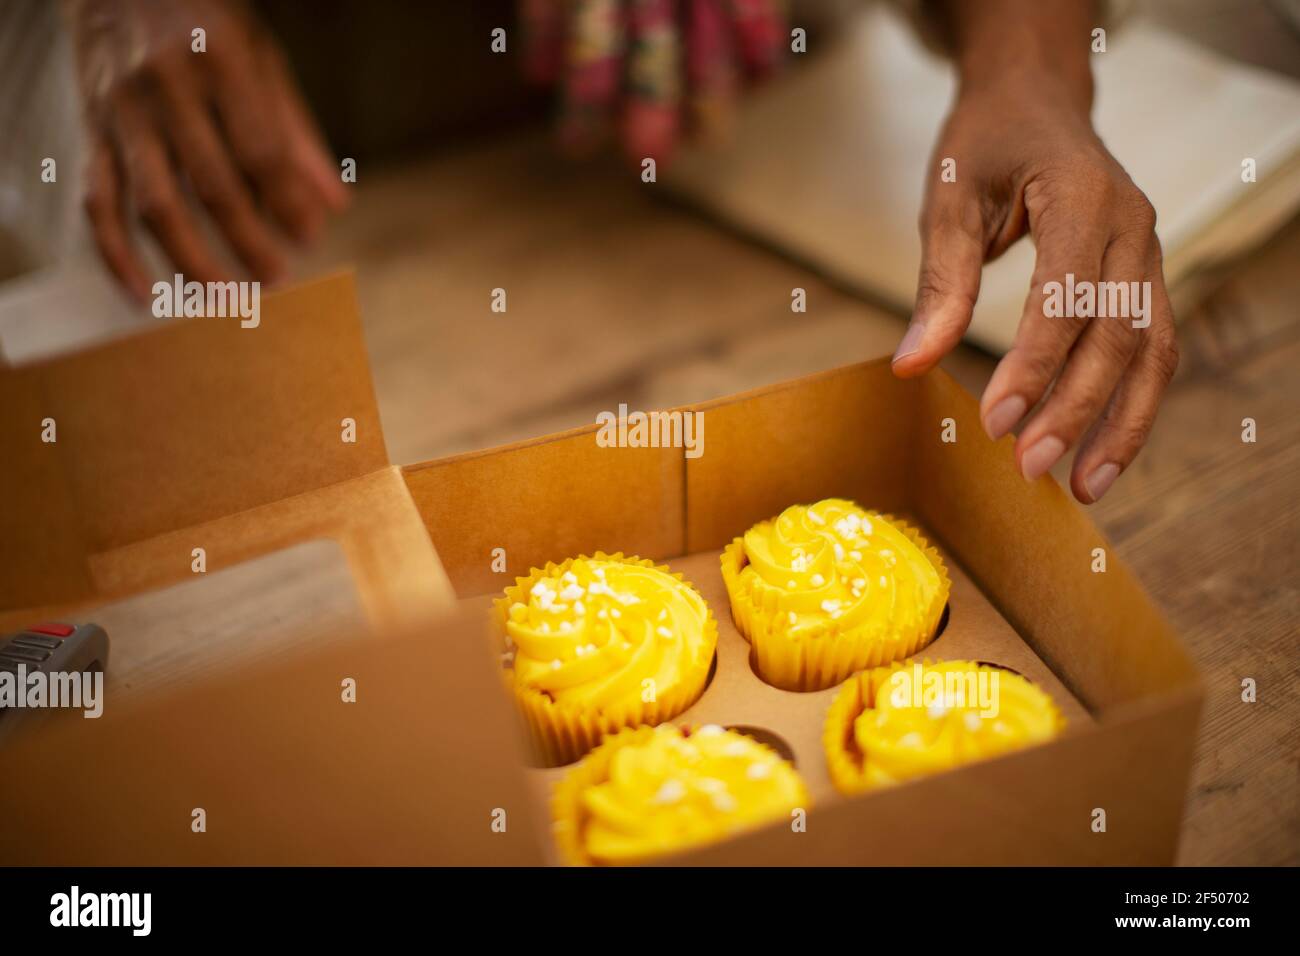 Woman reaching for lemon yellow cupcakes in bakery box Stock Photo